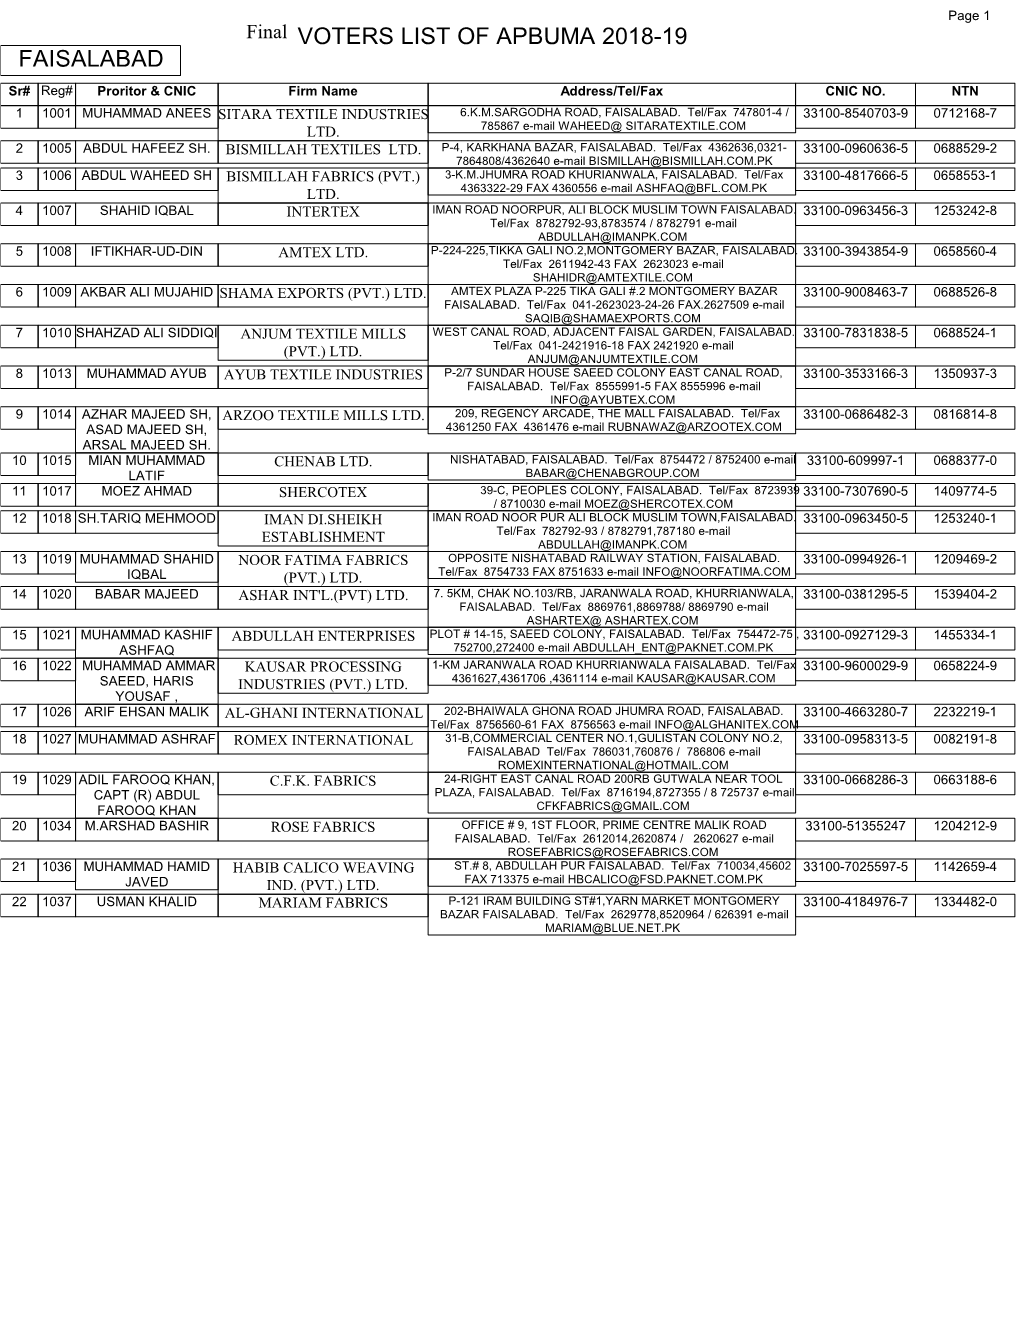 Voters List of Apbuma 2018-19 Faisalabad